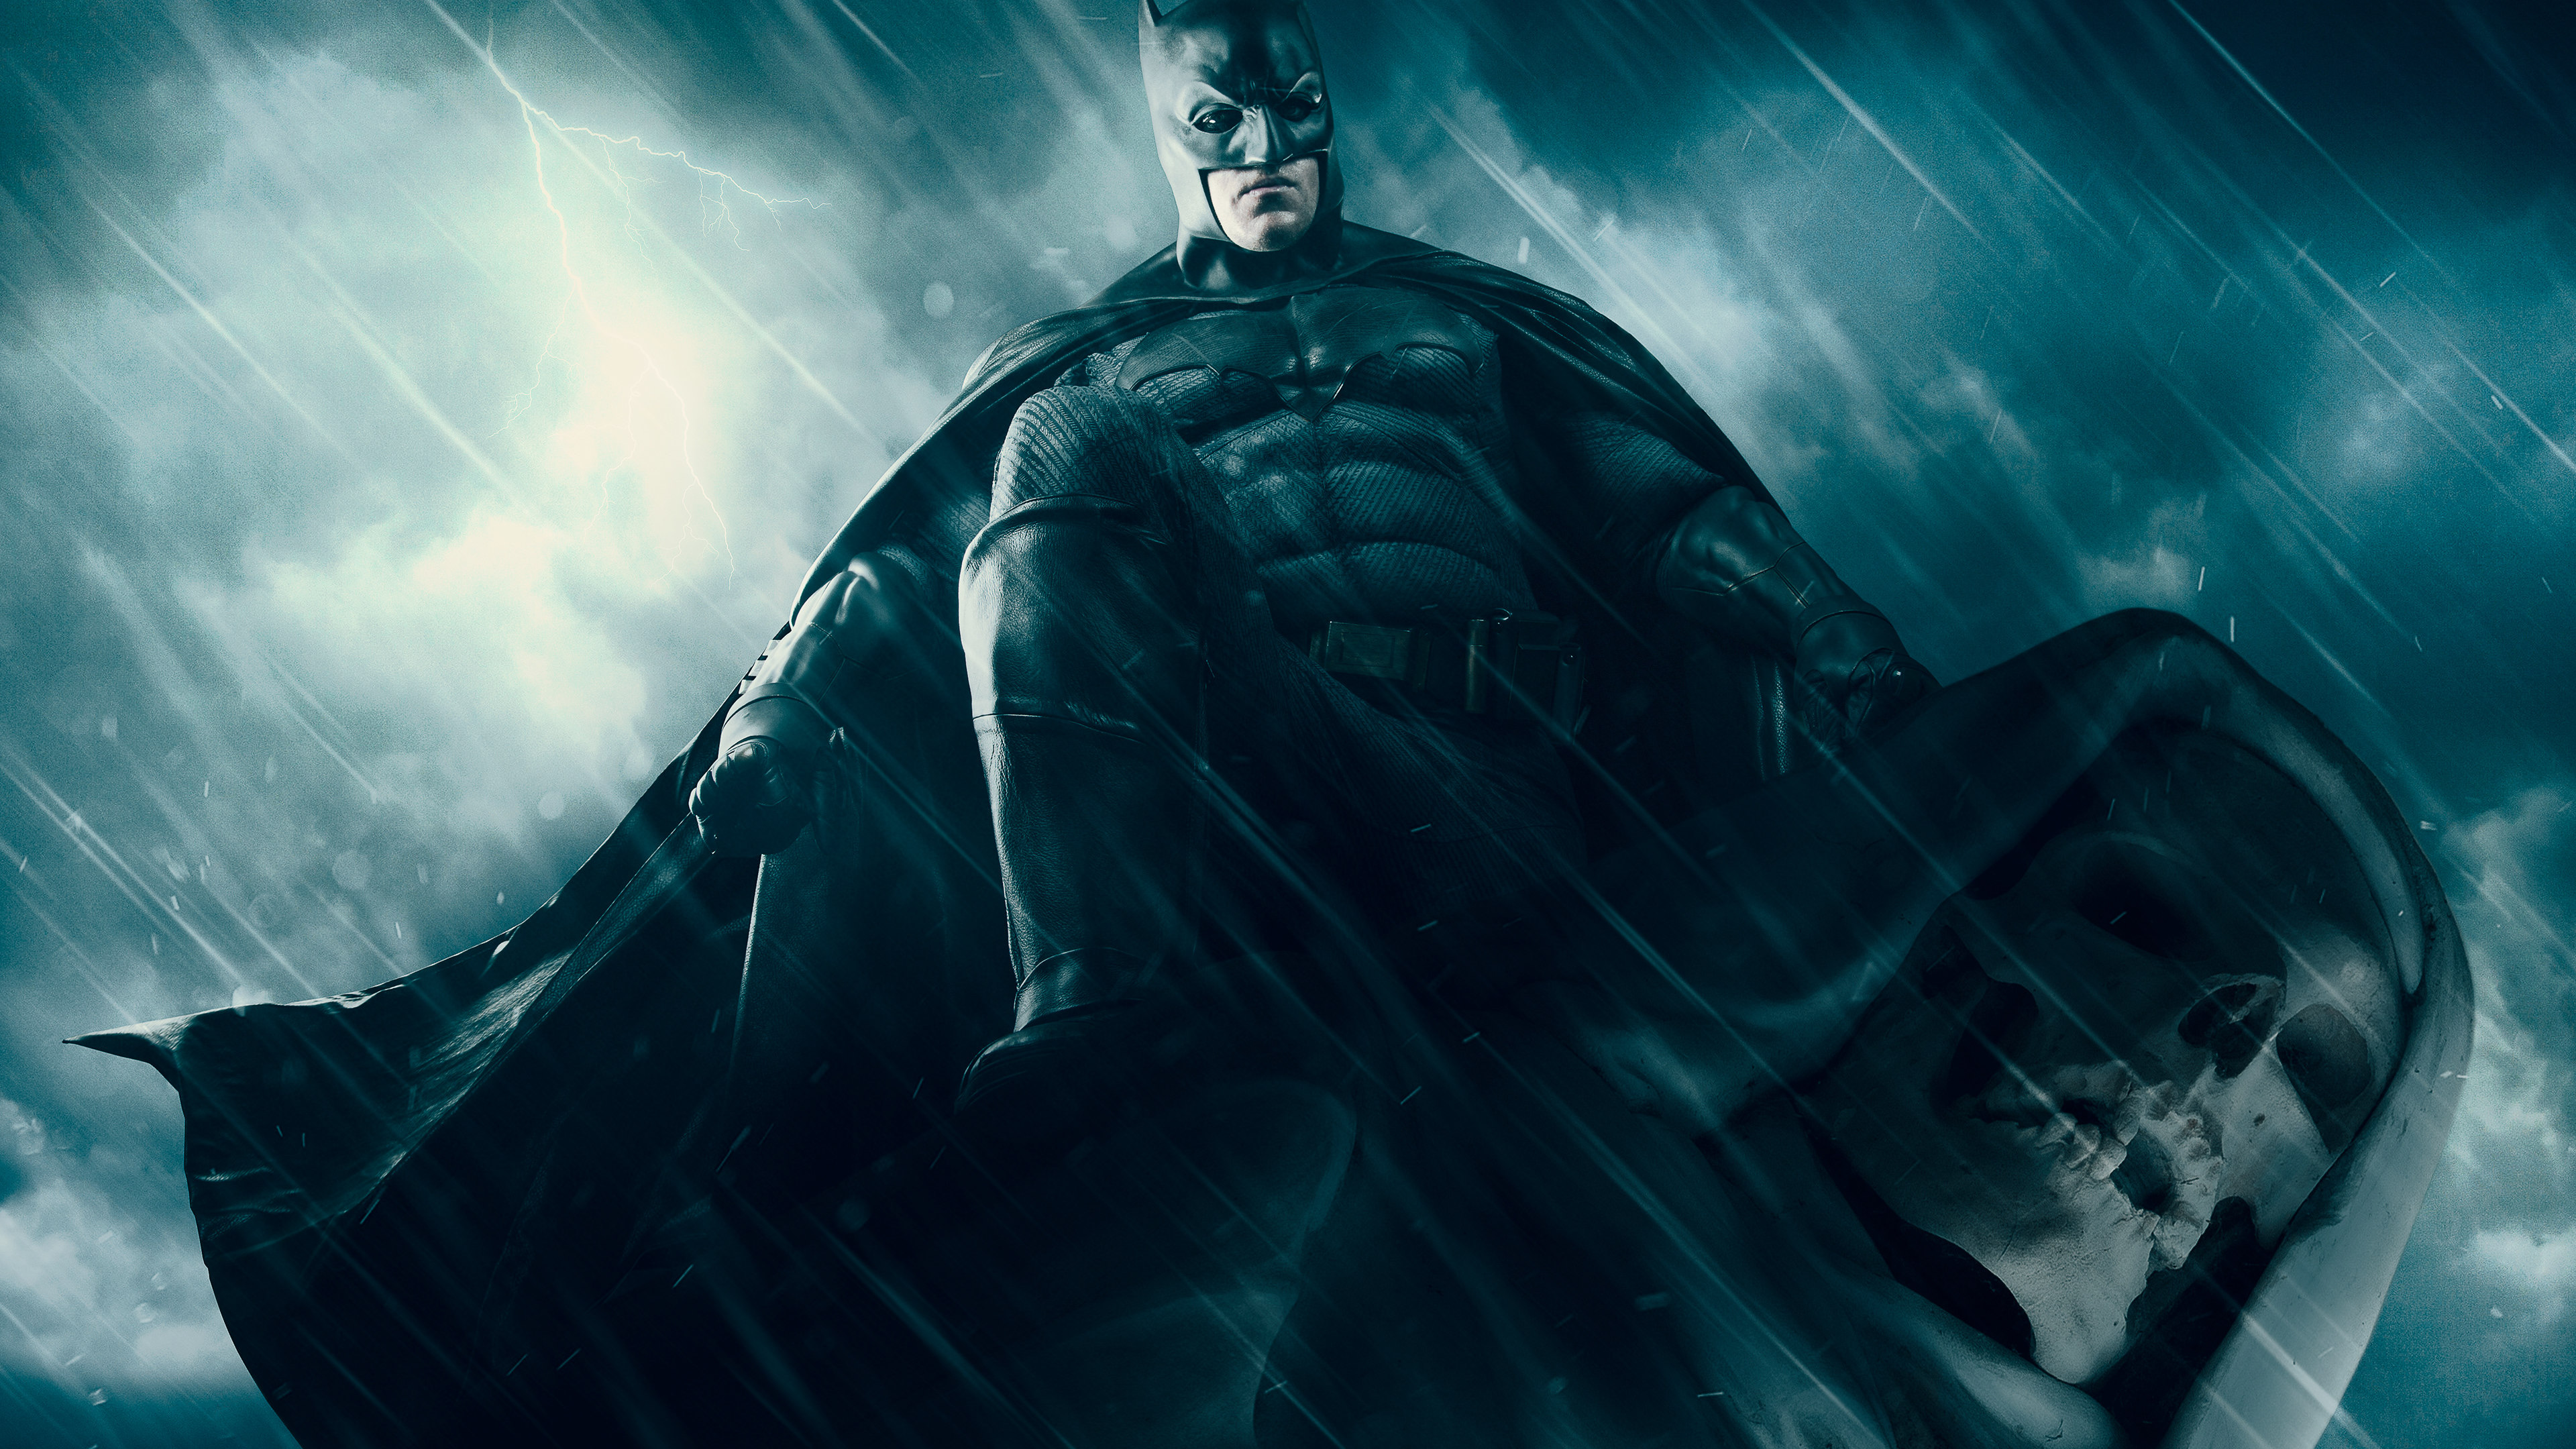 Wallpaper ID 71931  batman hd 4k superheroes digital art artwork  free download